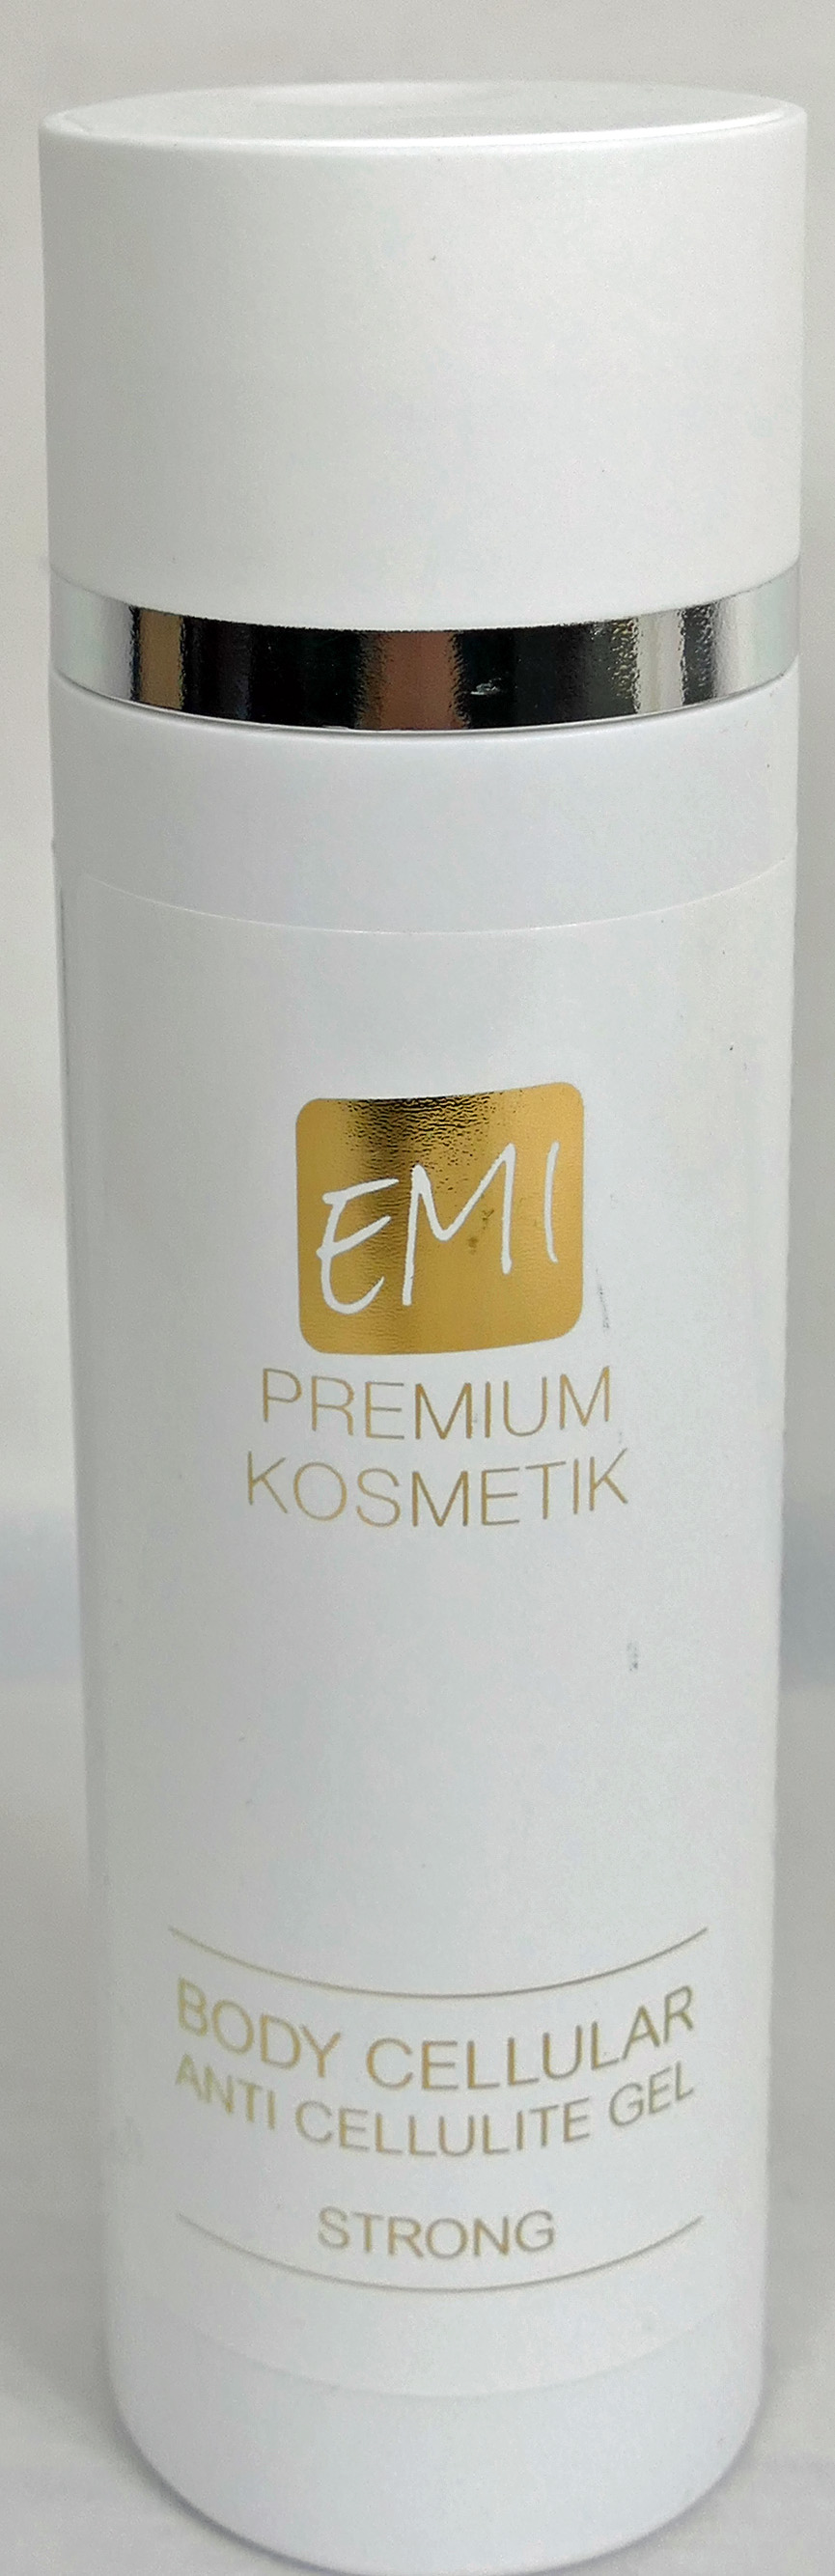 EMI Body Cellular Anti-Cellulite Gel STRONG